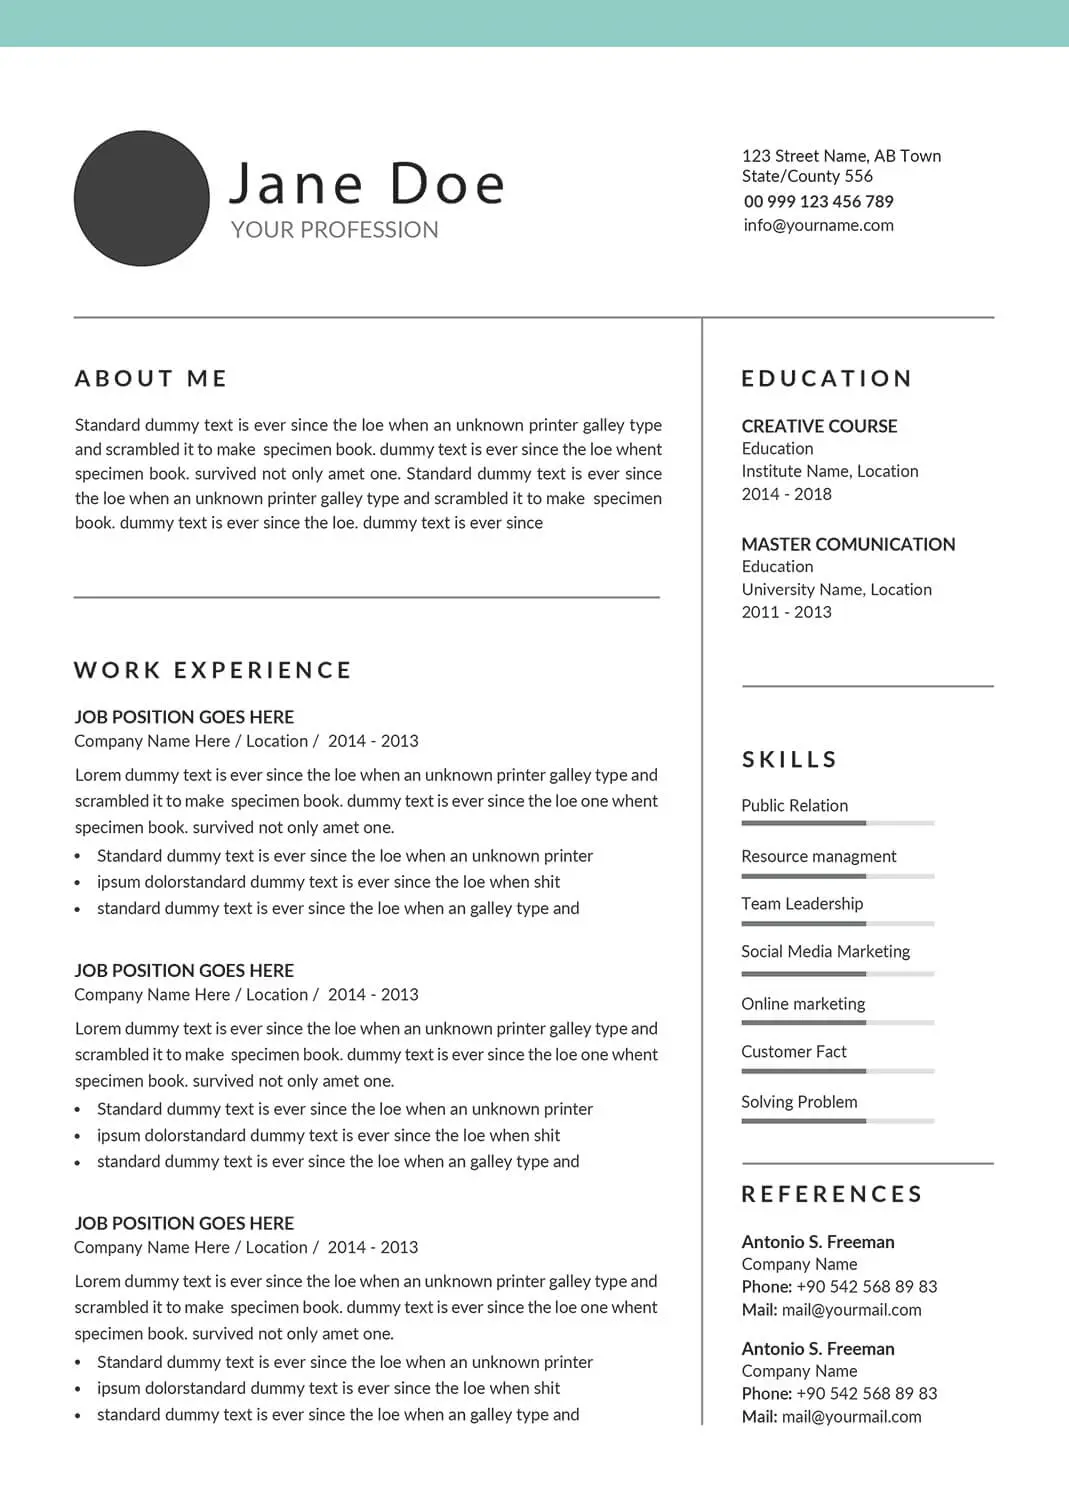 Best resume format for
forklift operators